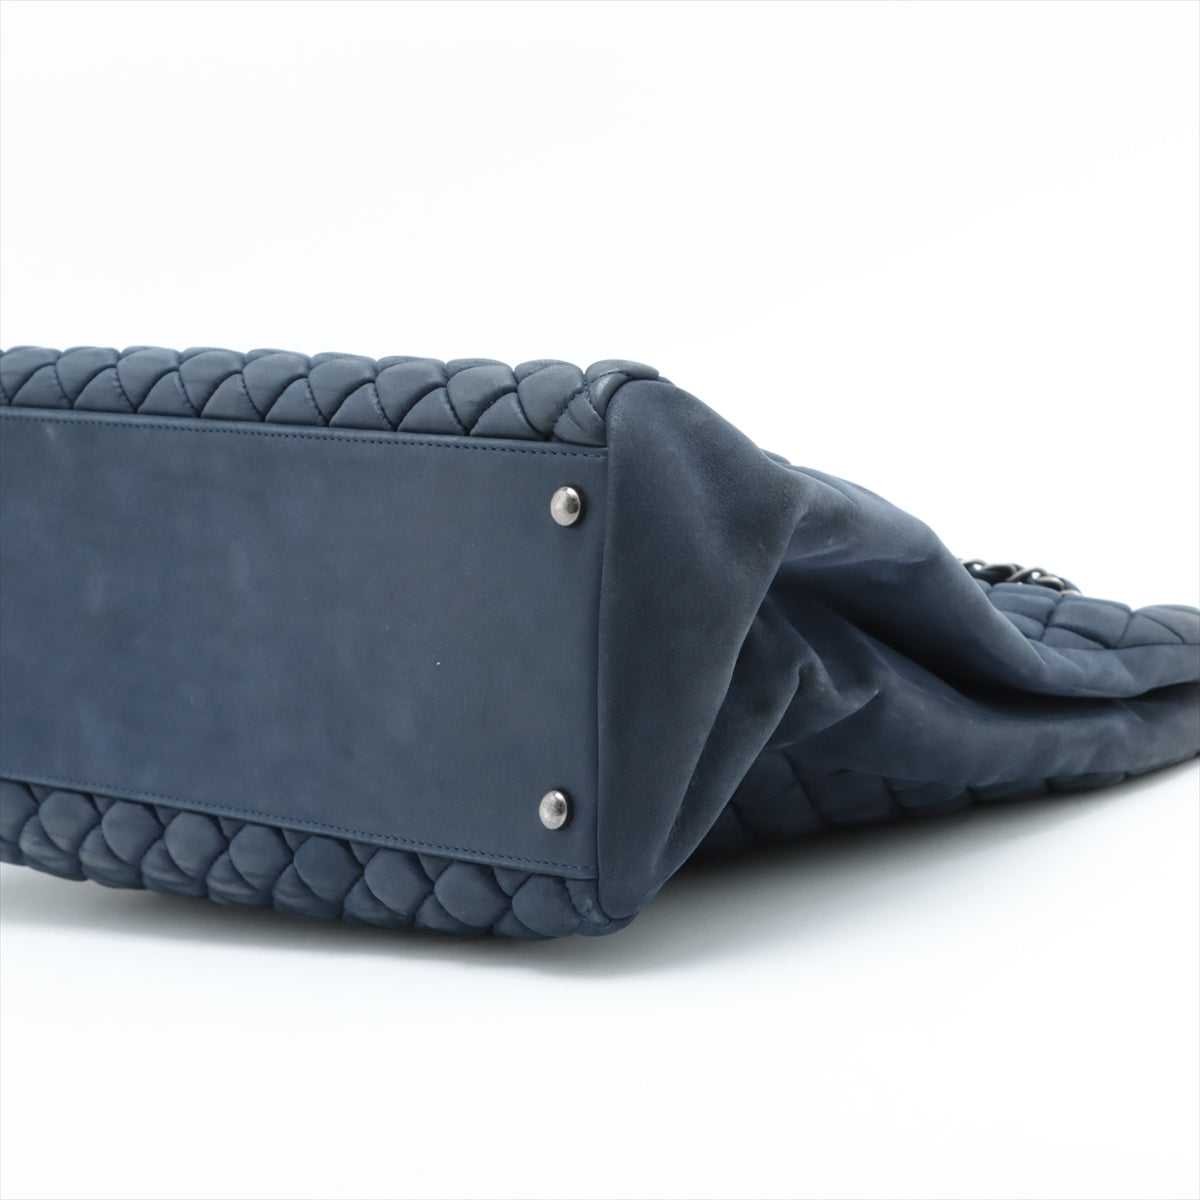 Chanel Matelasse Coating leather Chain tote bag Navy blue Gunmetallic hardware 17XXXXXX